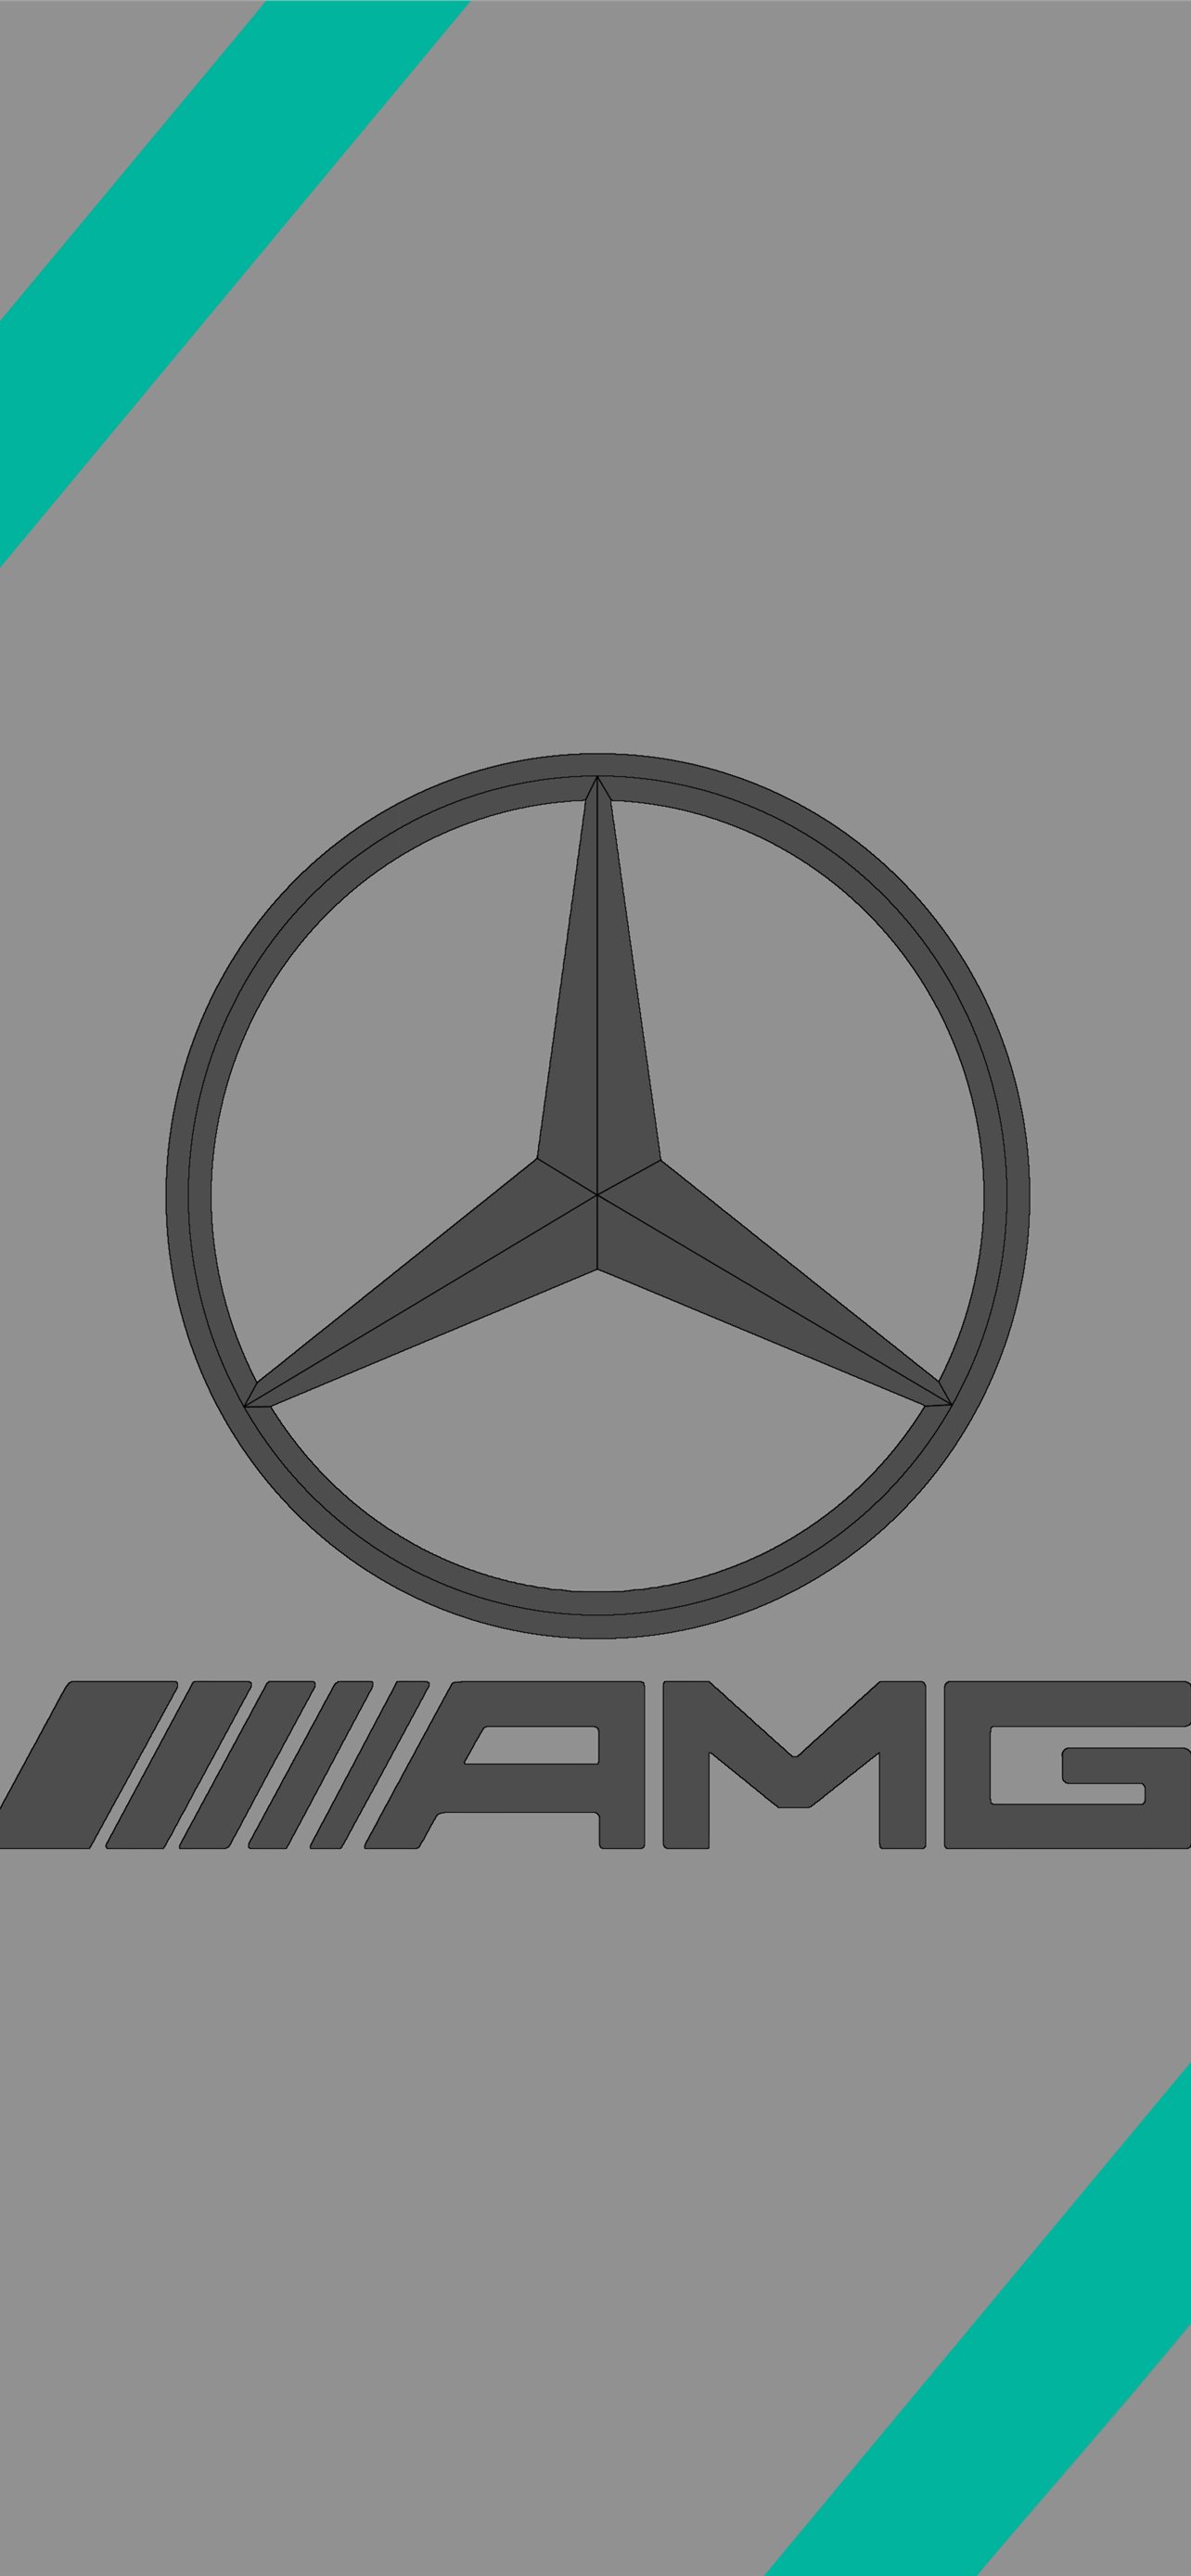 Mercedes Benz Logo iPhone Wallpaper